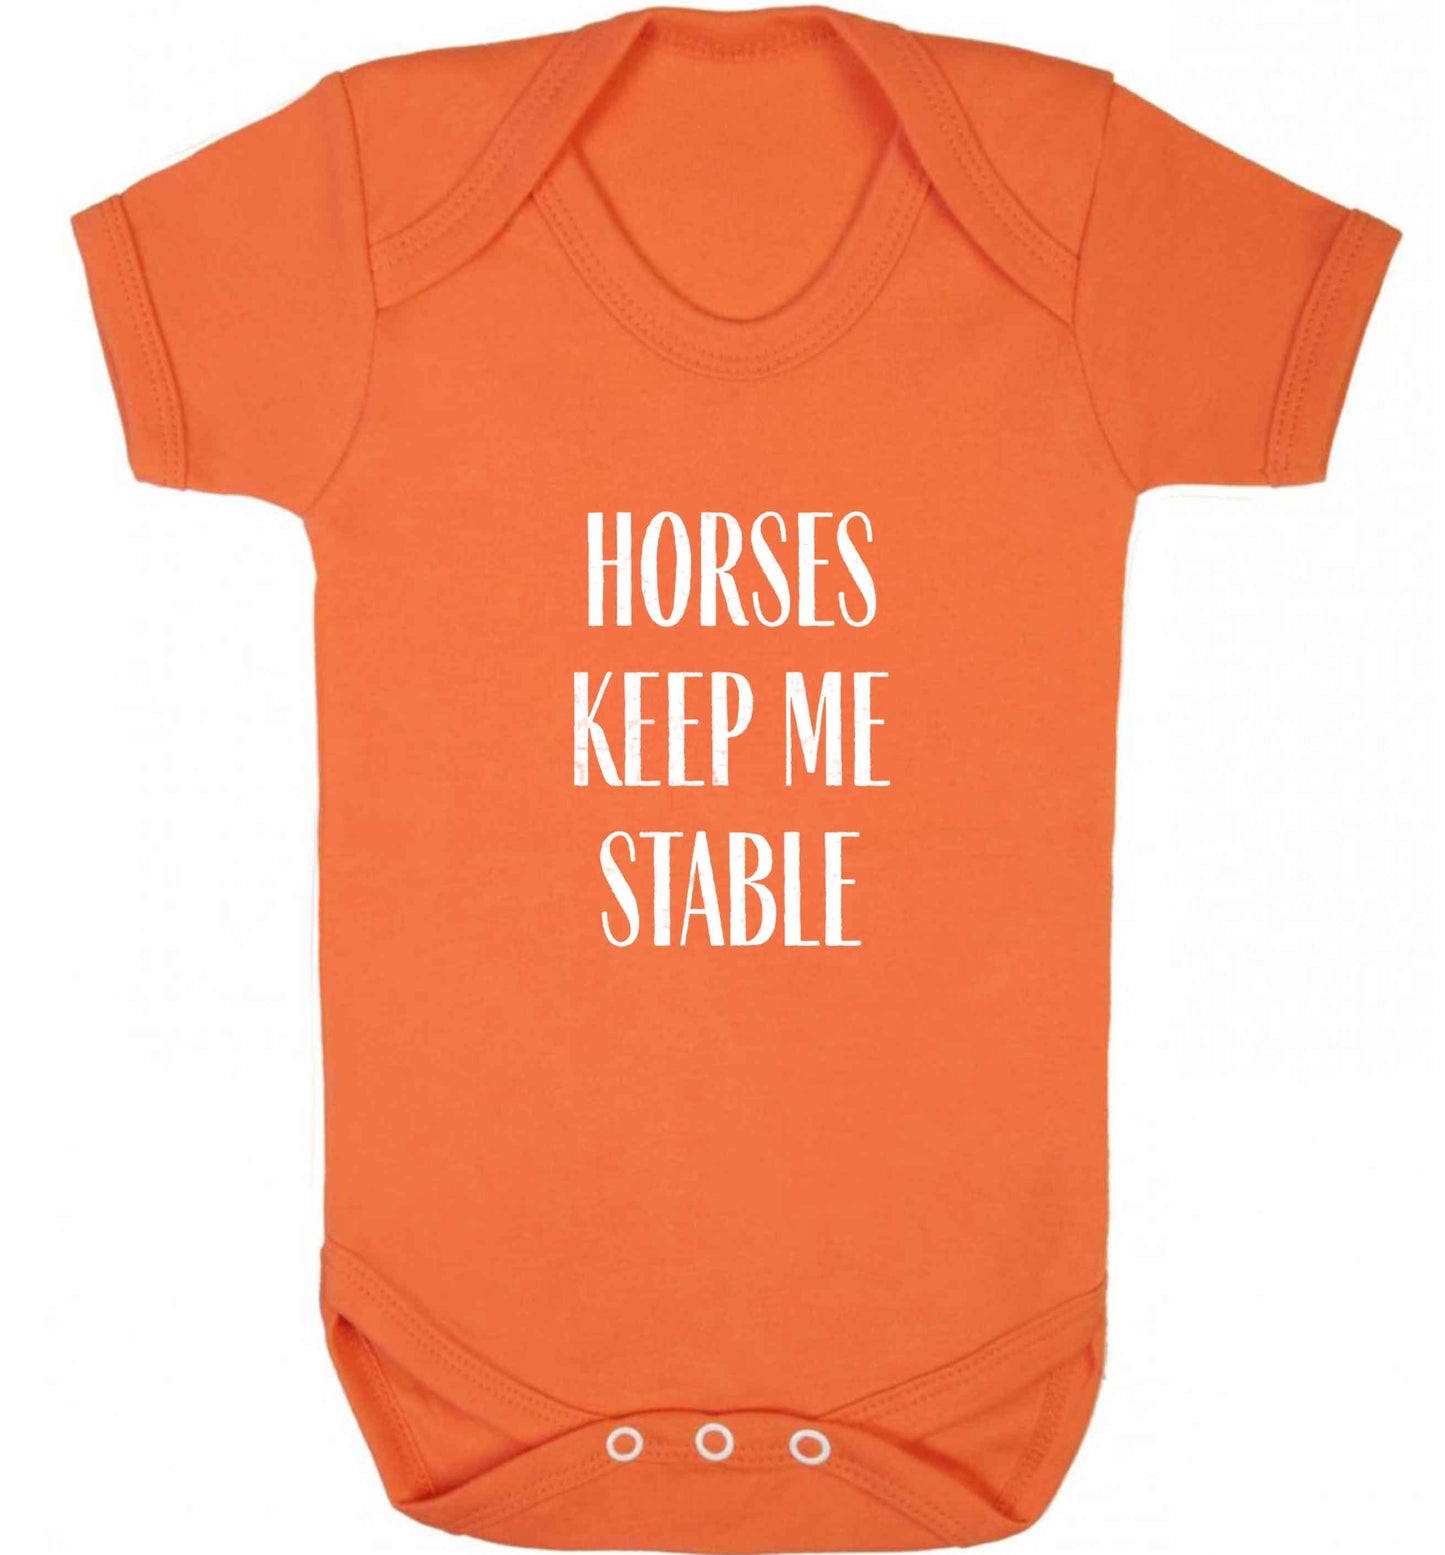 Horses keep me stable baby vest orange 18-24 months